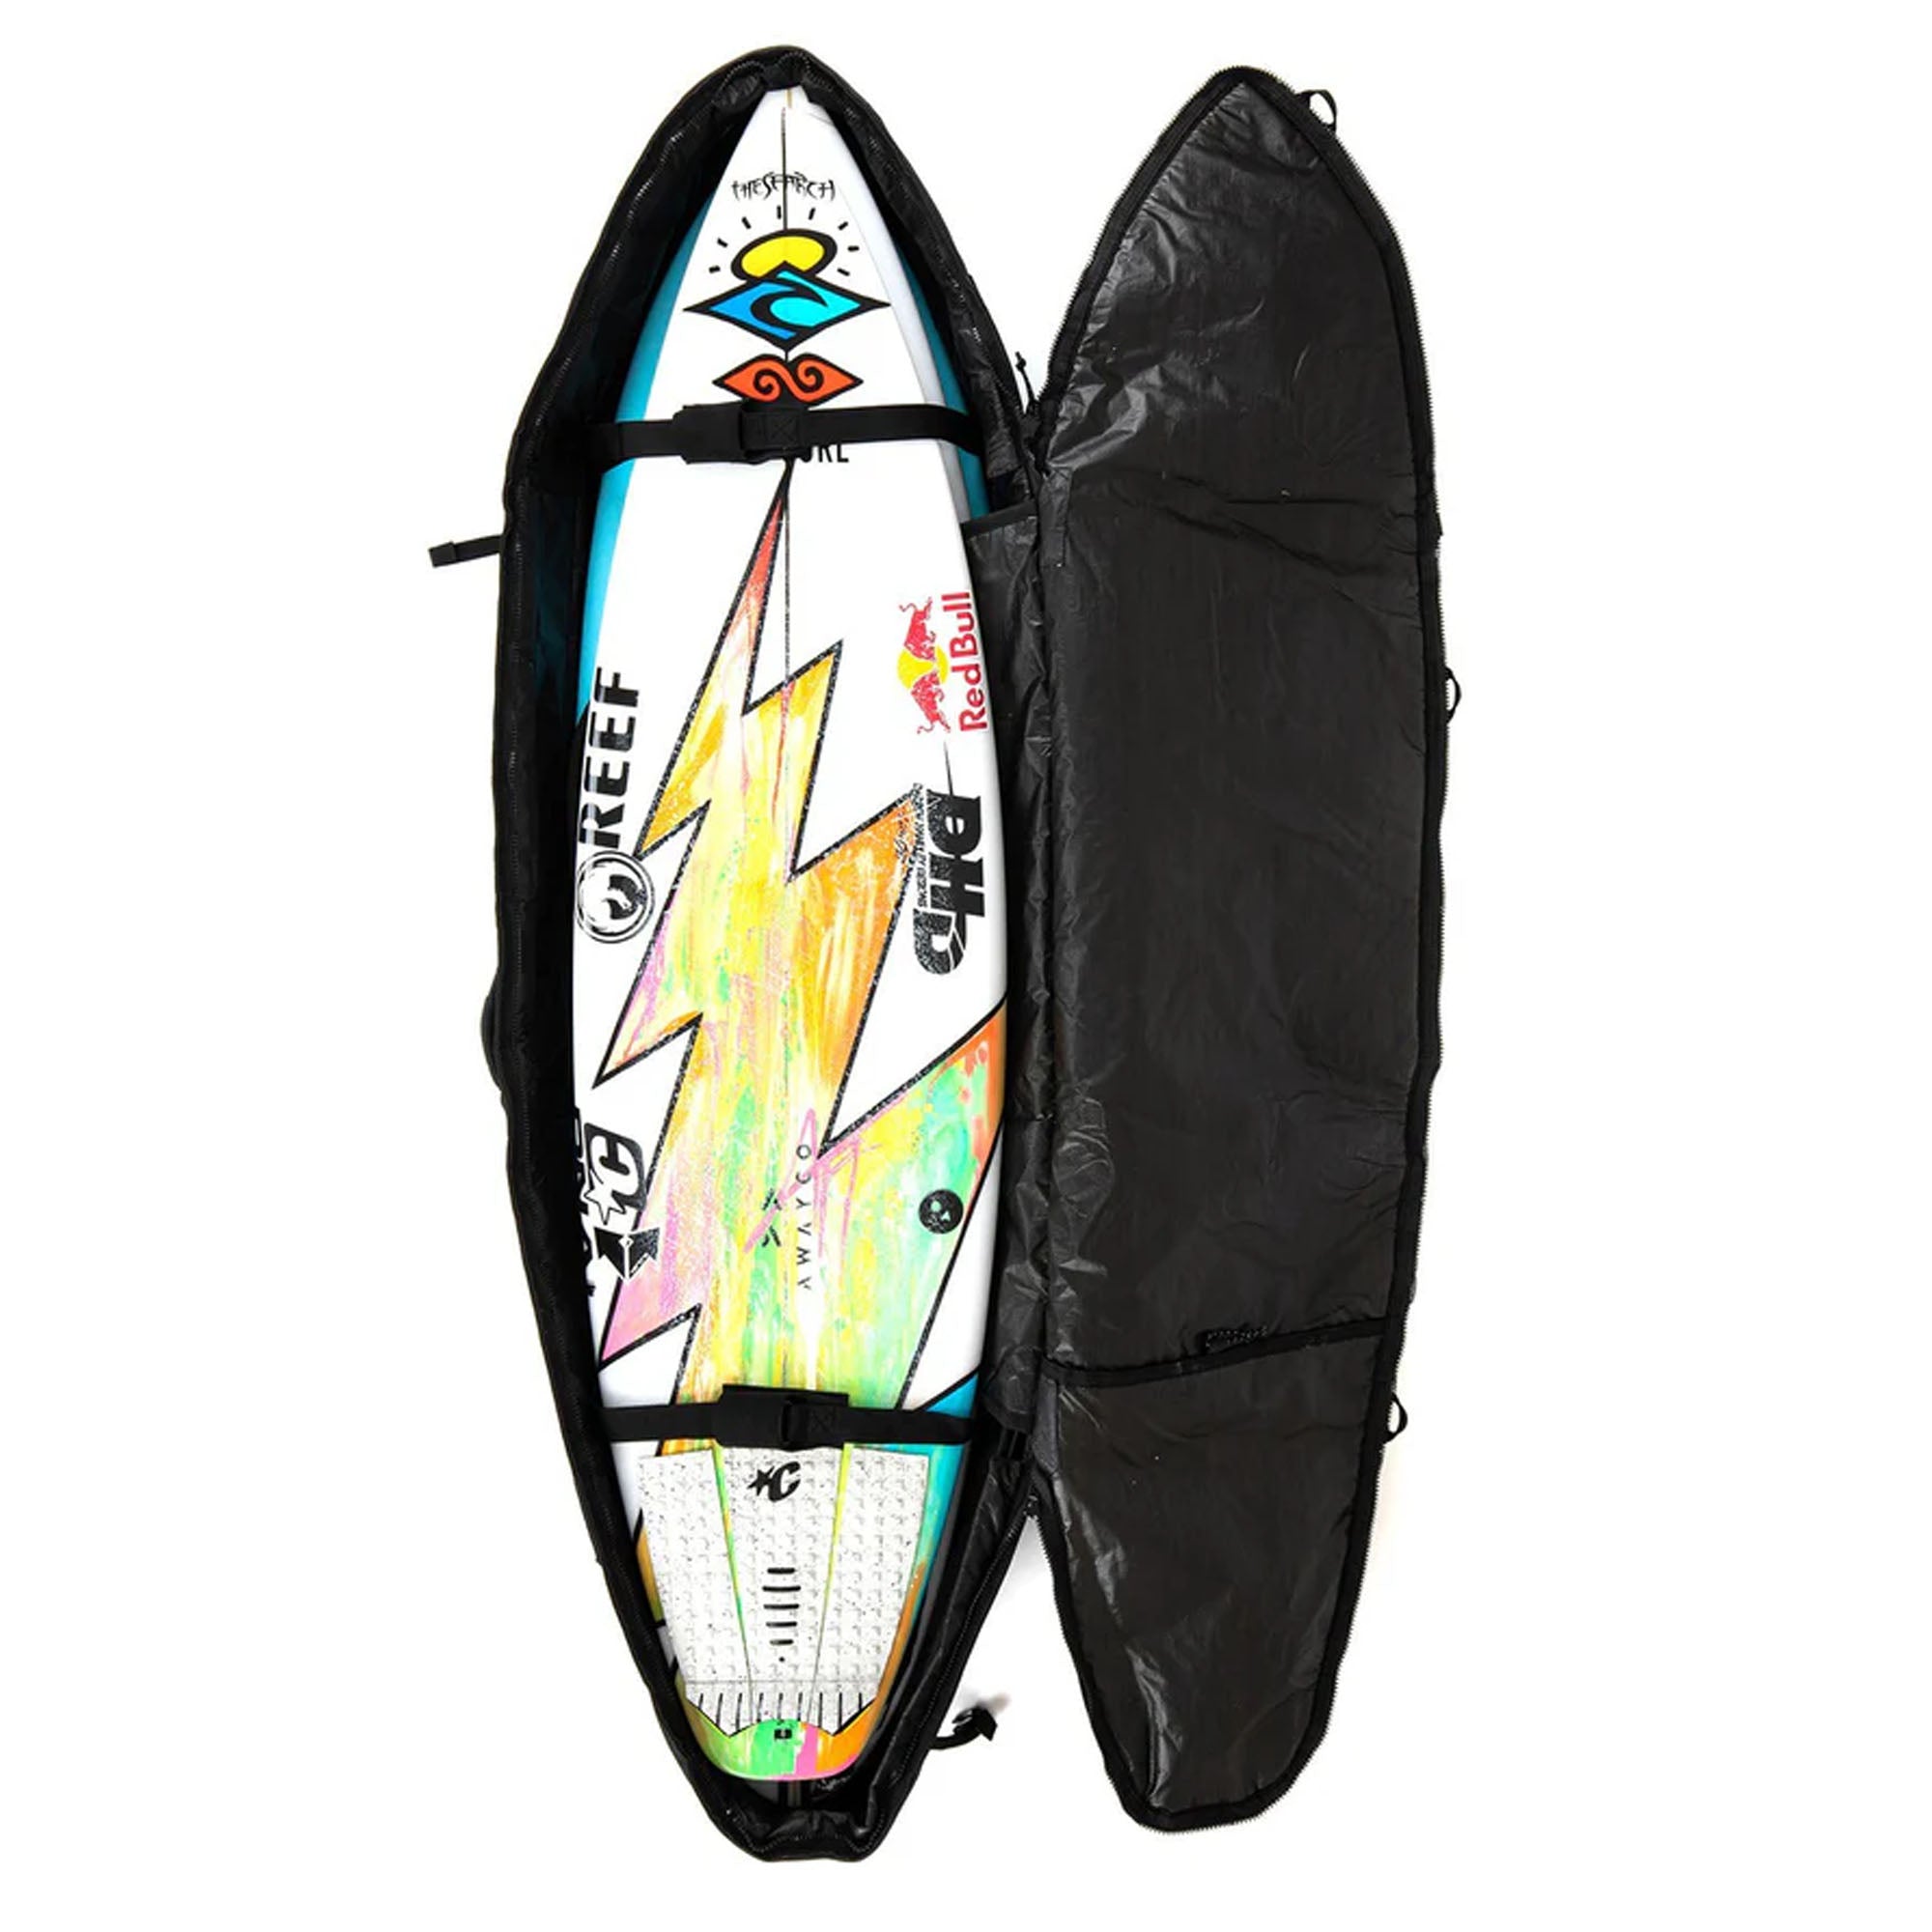 Creatures of Leisure Shortboard Triple DT2.0 Surfboard Bag